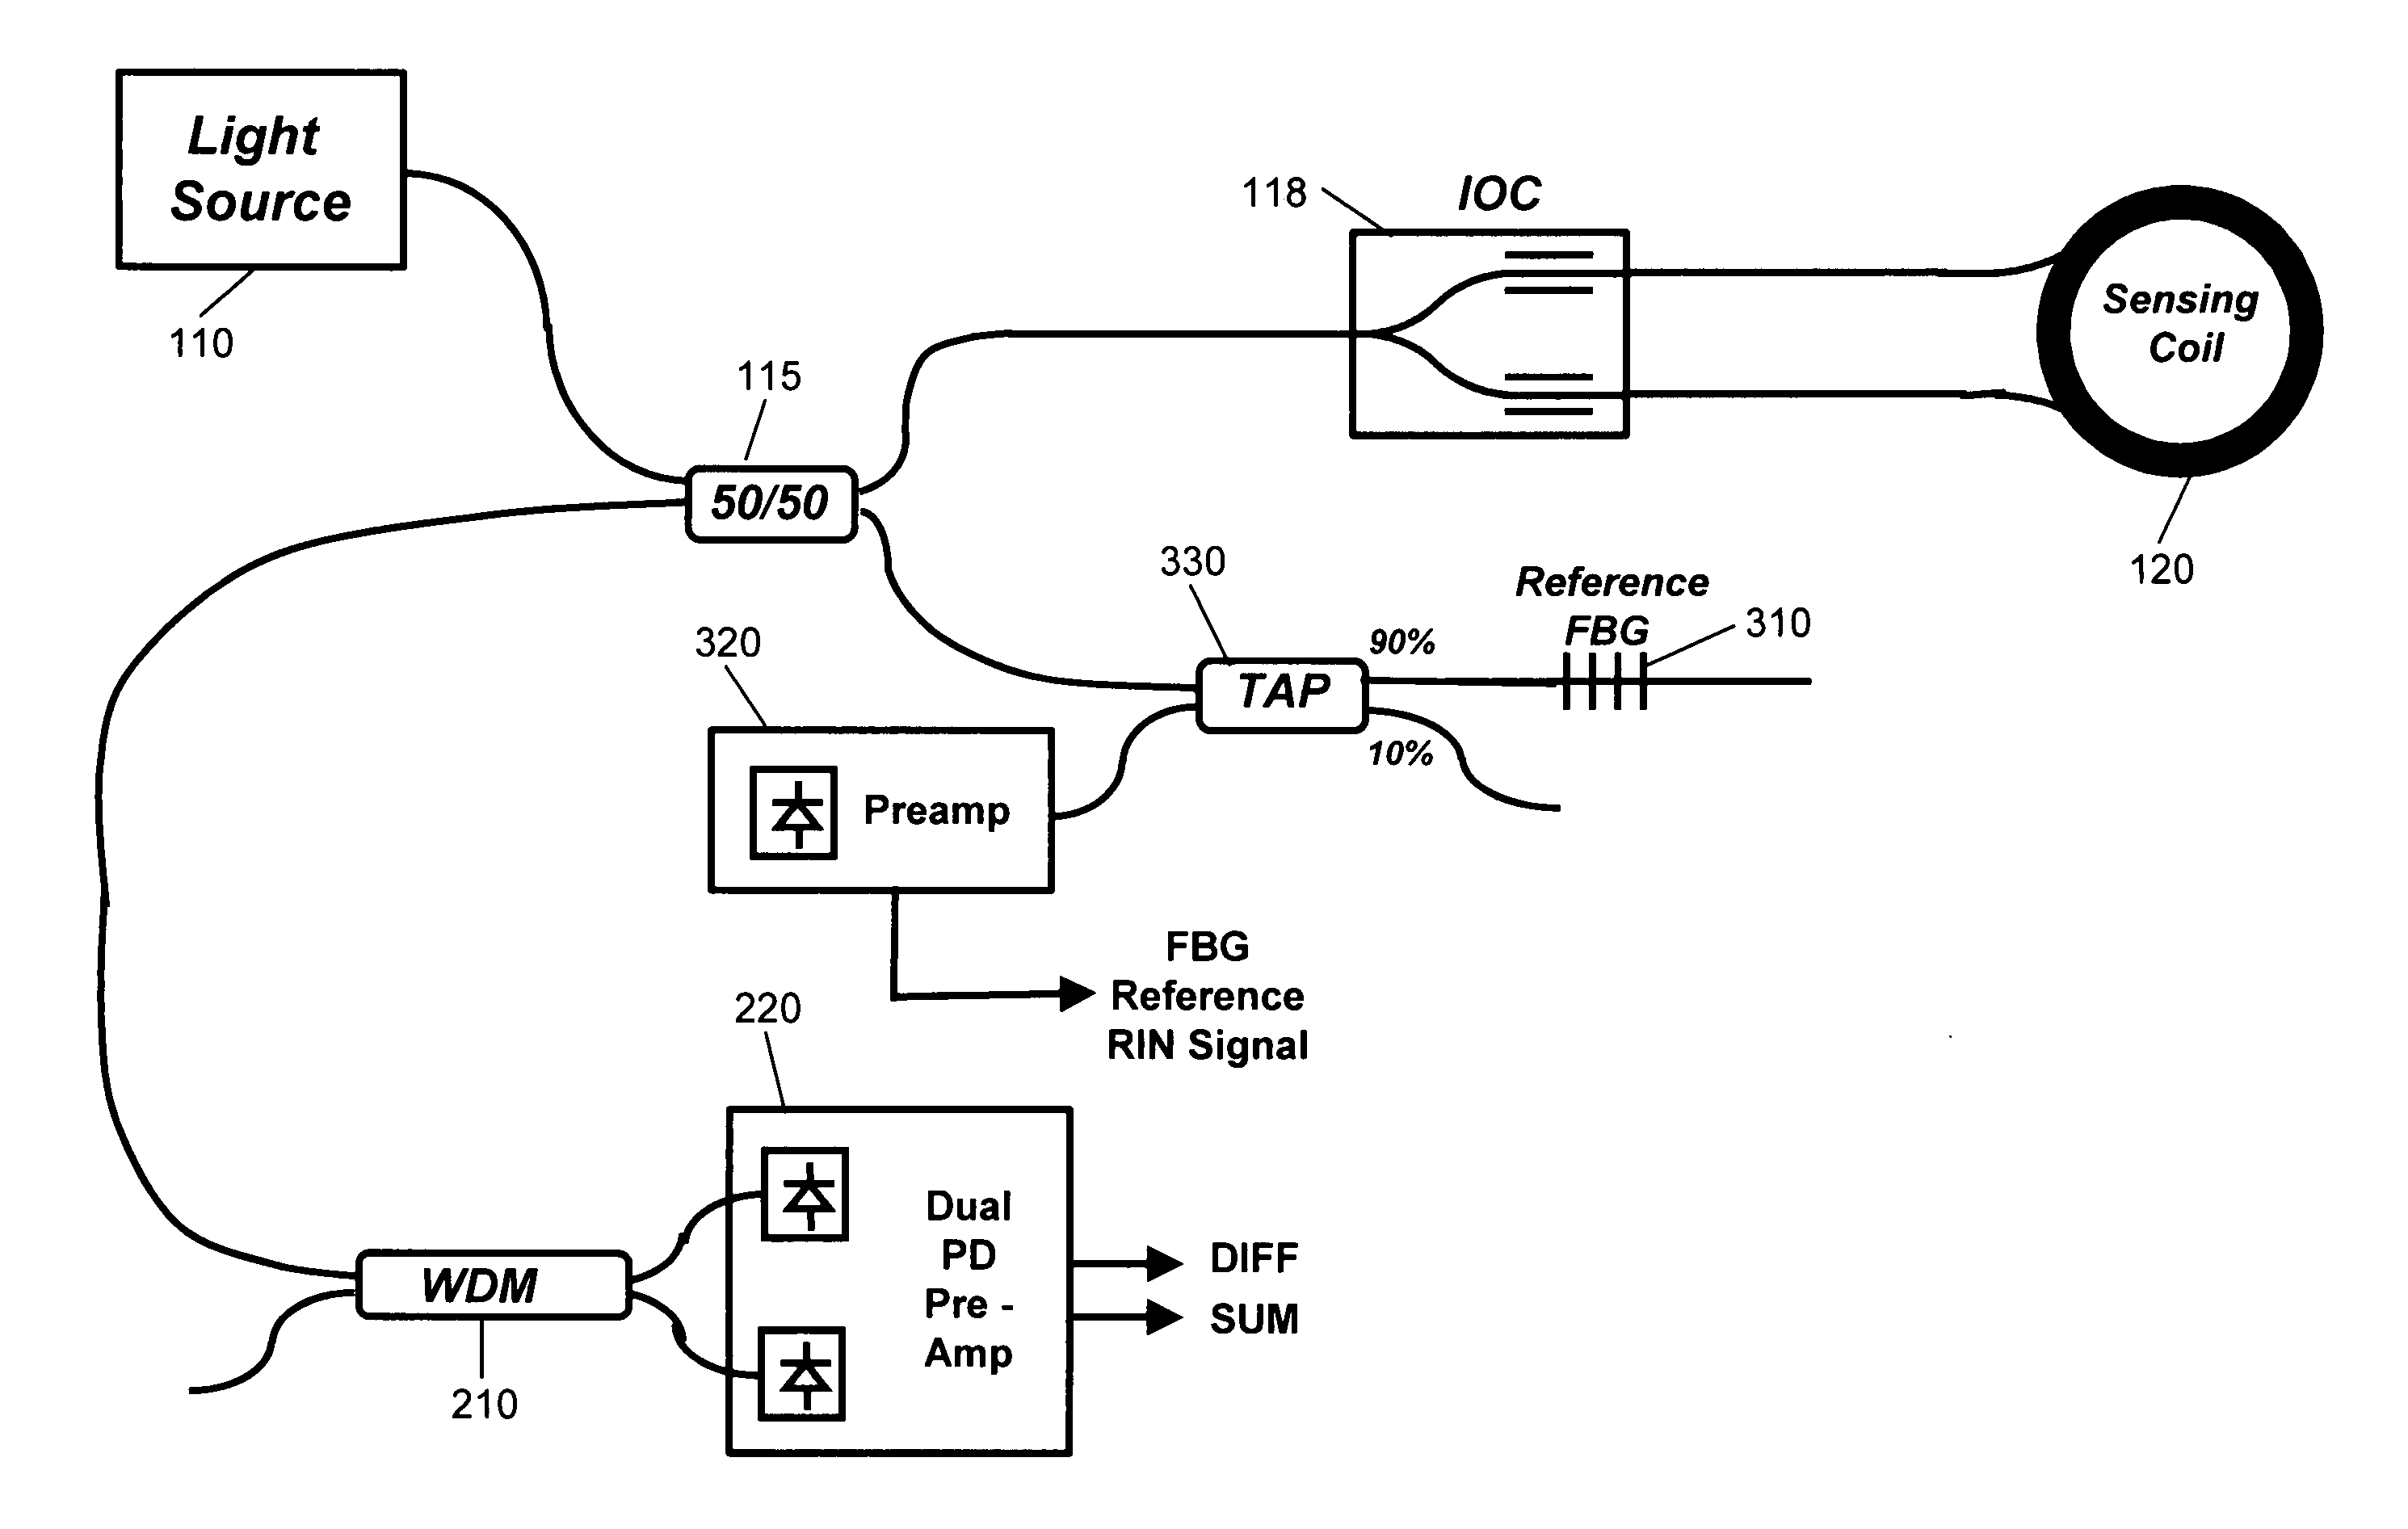 Fiber optic gyroscope using a narrowband FBG filter as a wavelength reference